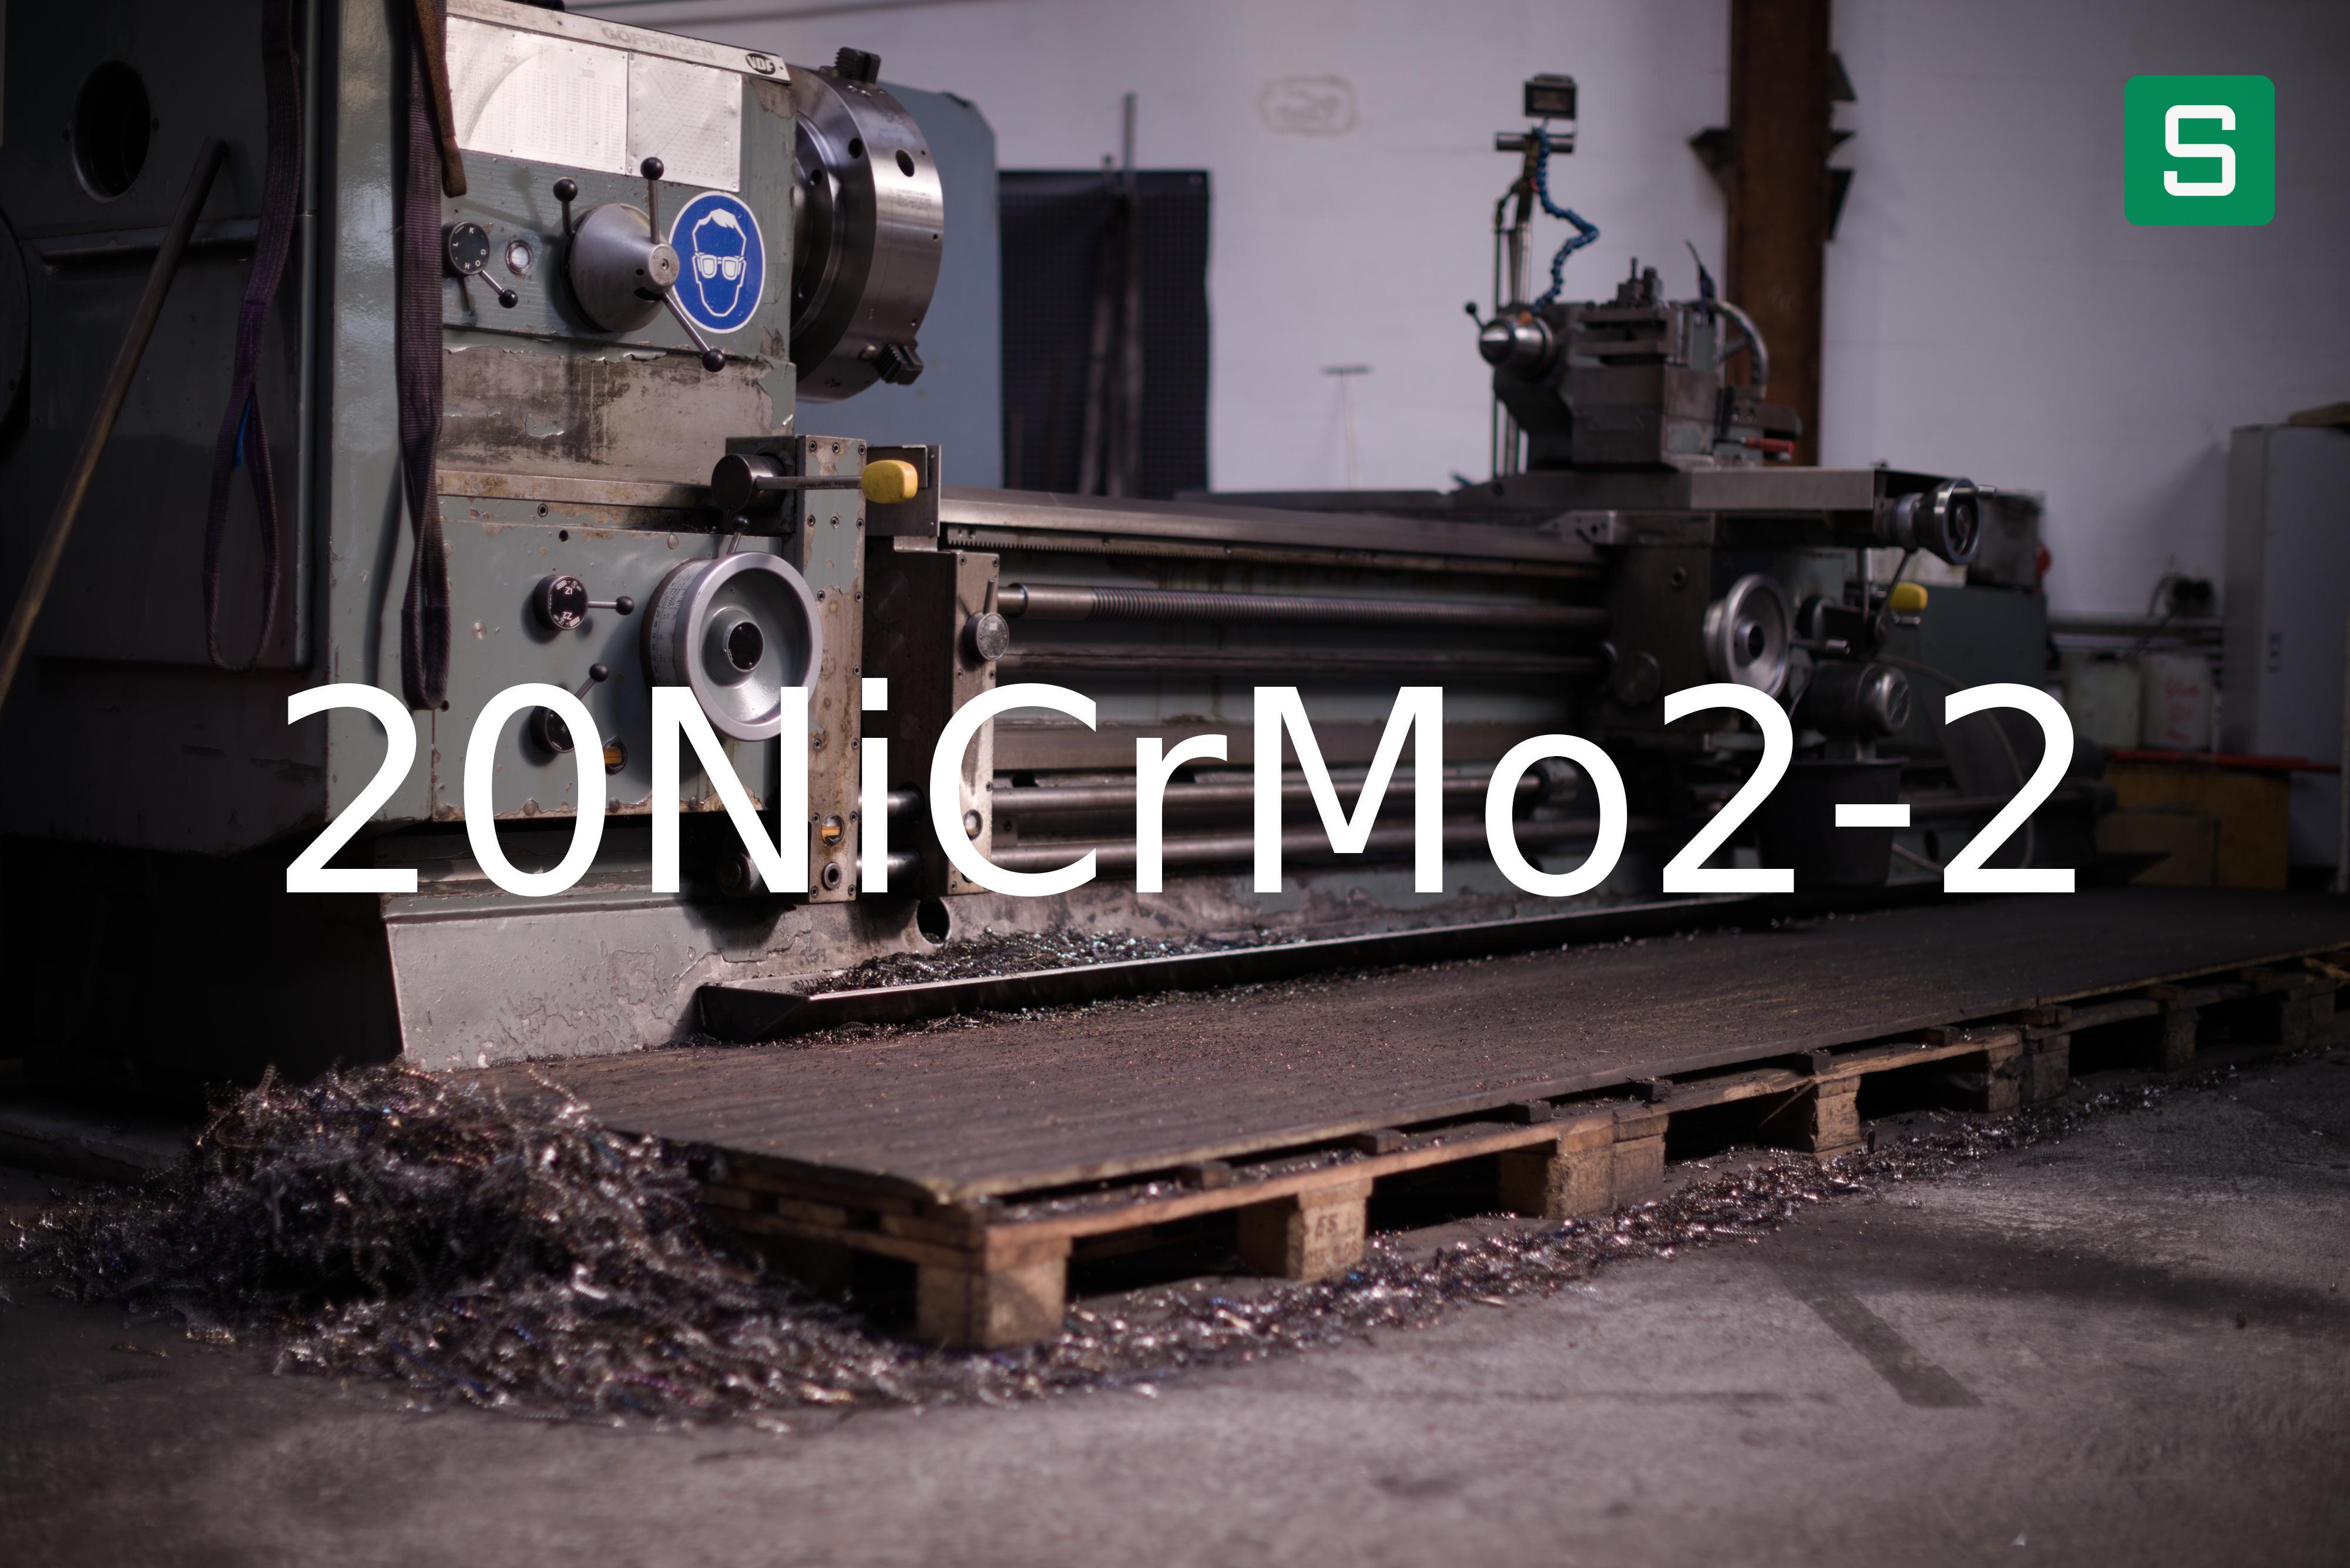 Steel Material: 20NiCrMo2-2